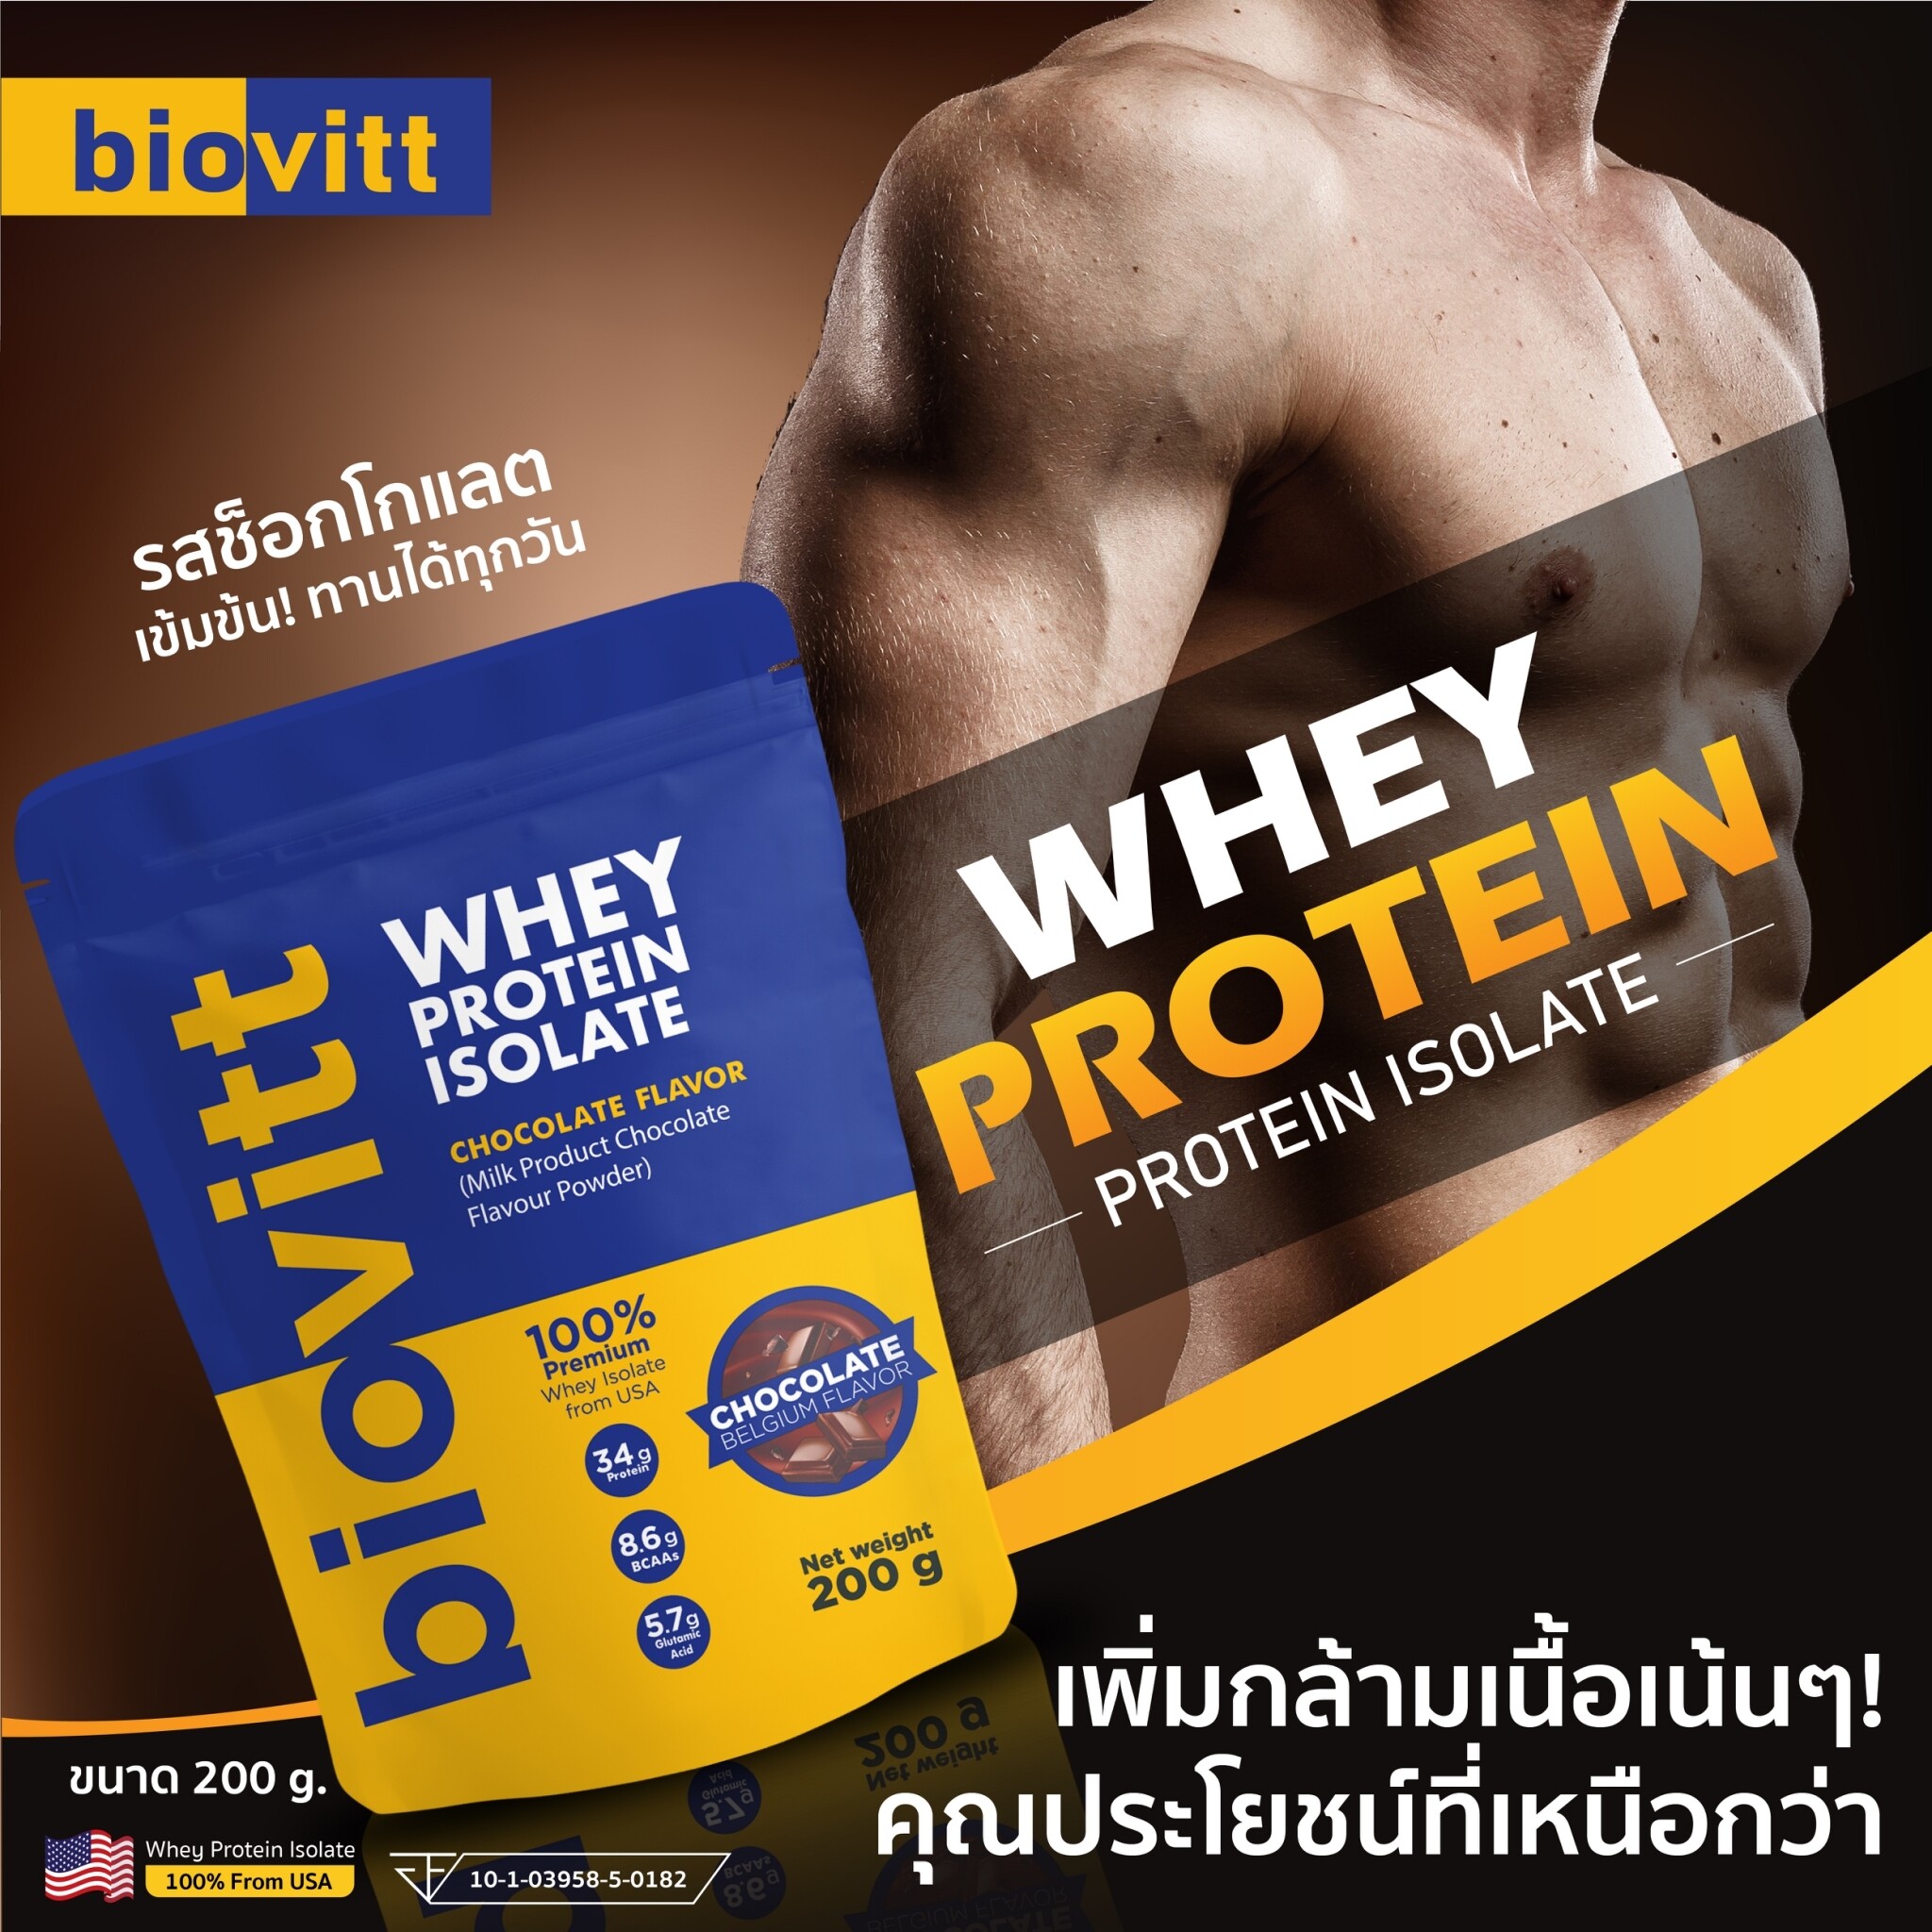 Biovitt Whey Protein Isolate เวย์โปรตีน ไอโซเลท รสช็อกโกแลต ลีนไขมัน ปั๊มซิกแพค เร่งกล้าม เน้นอร่อย ไม่มีน้ำตาล  ลด นน 200 กรัม (แพ็ค 1 ซอง)